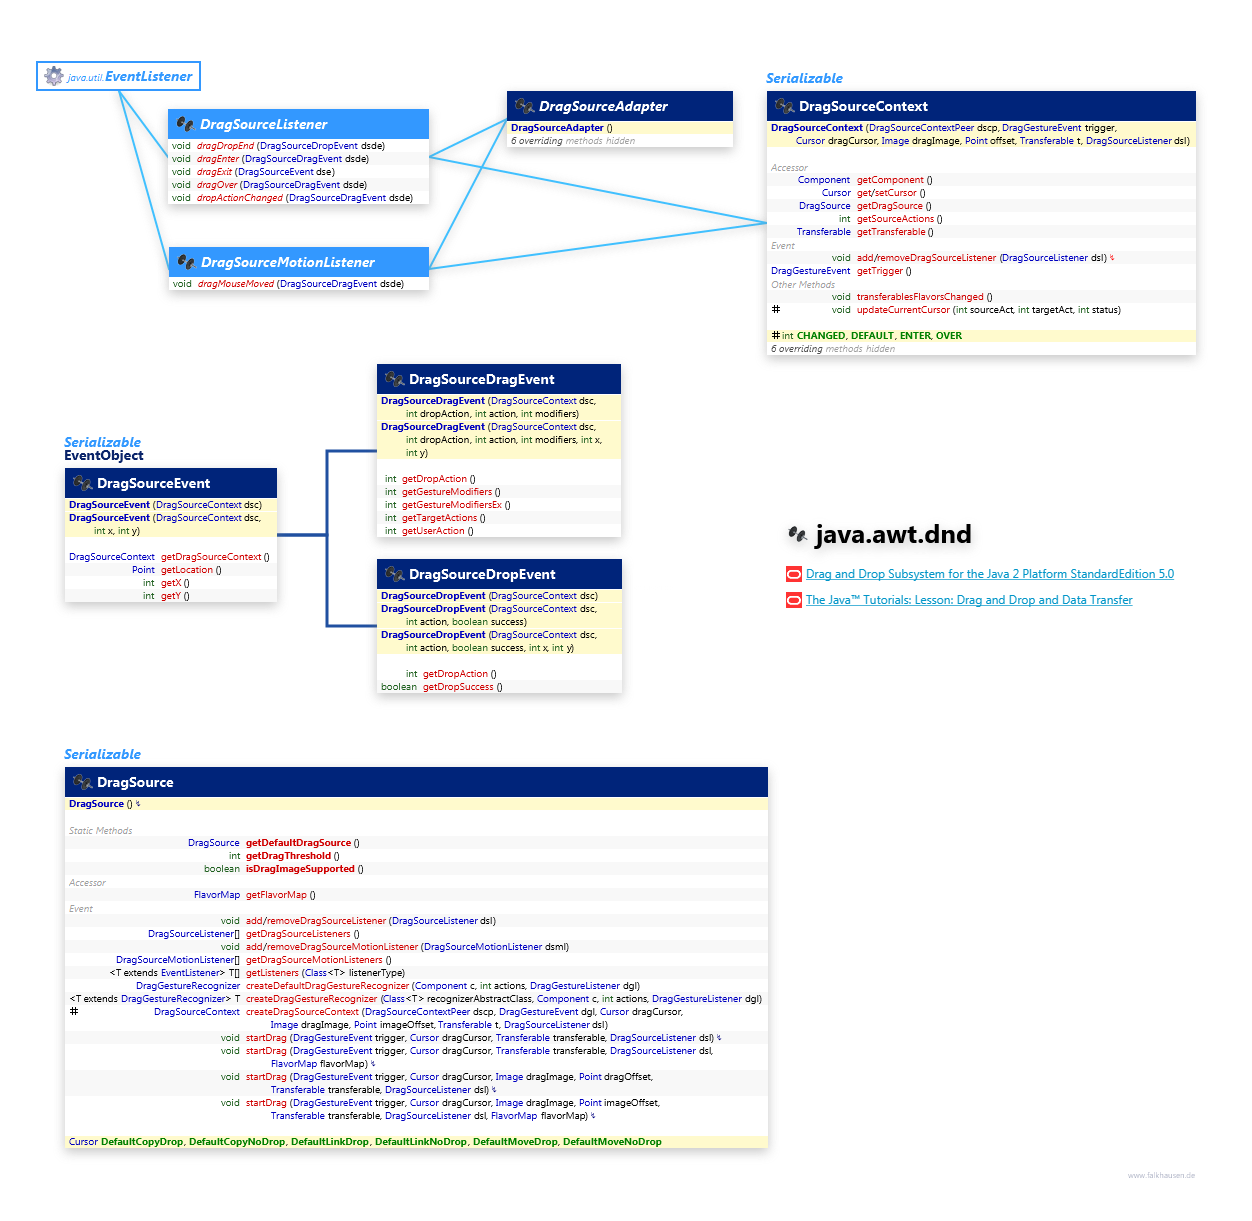 java.awt.dnd DragSource class diagram and api documentation for Java 8